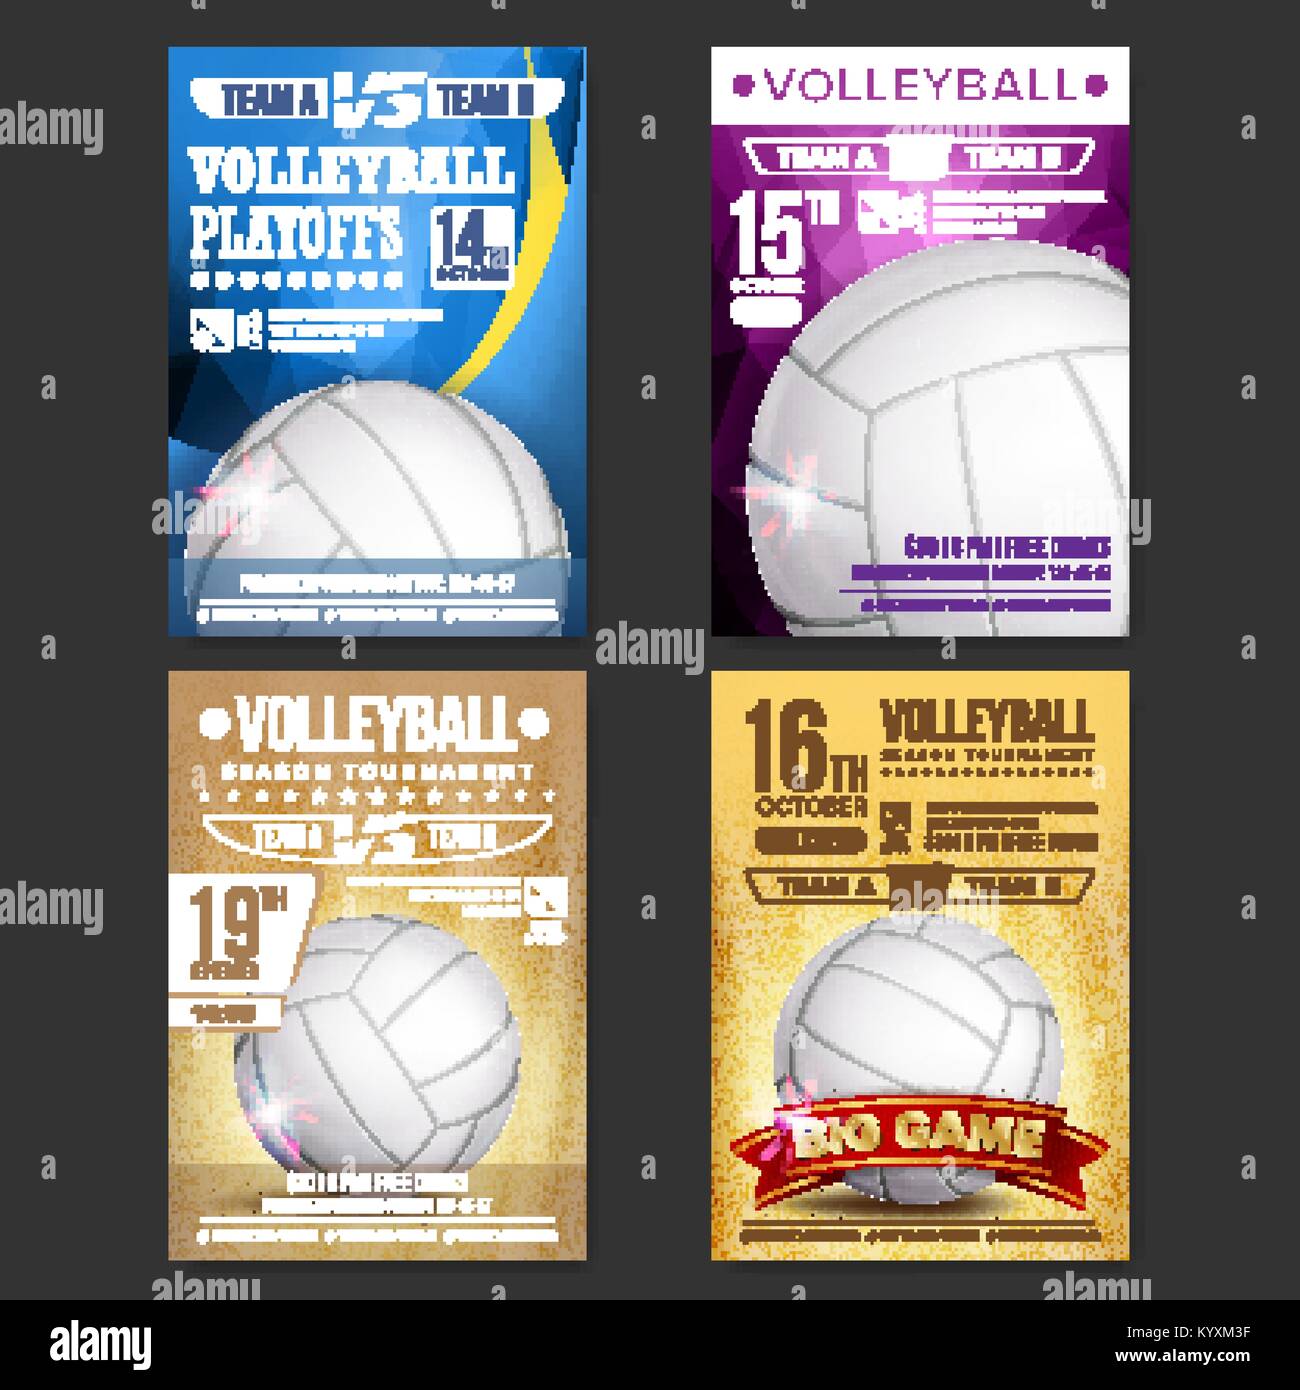 Volleyball Poster Set Vector. Design For Sport Bar Promotion. Volleyball Ball. Vertical Modern Tournament. Sport Event Announcement. Banner Advertising. Template Illustration Stock Vector